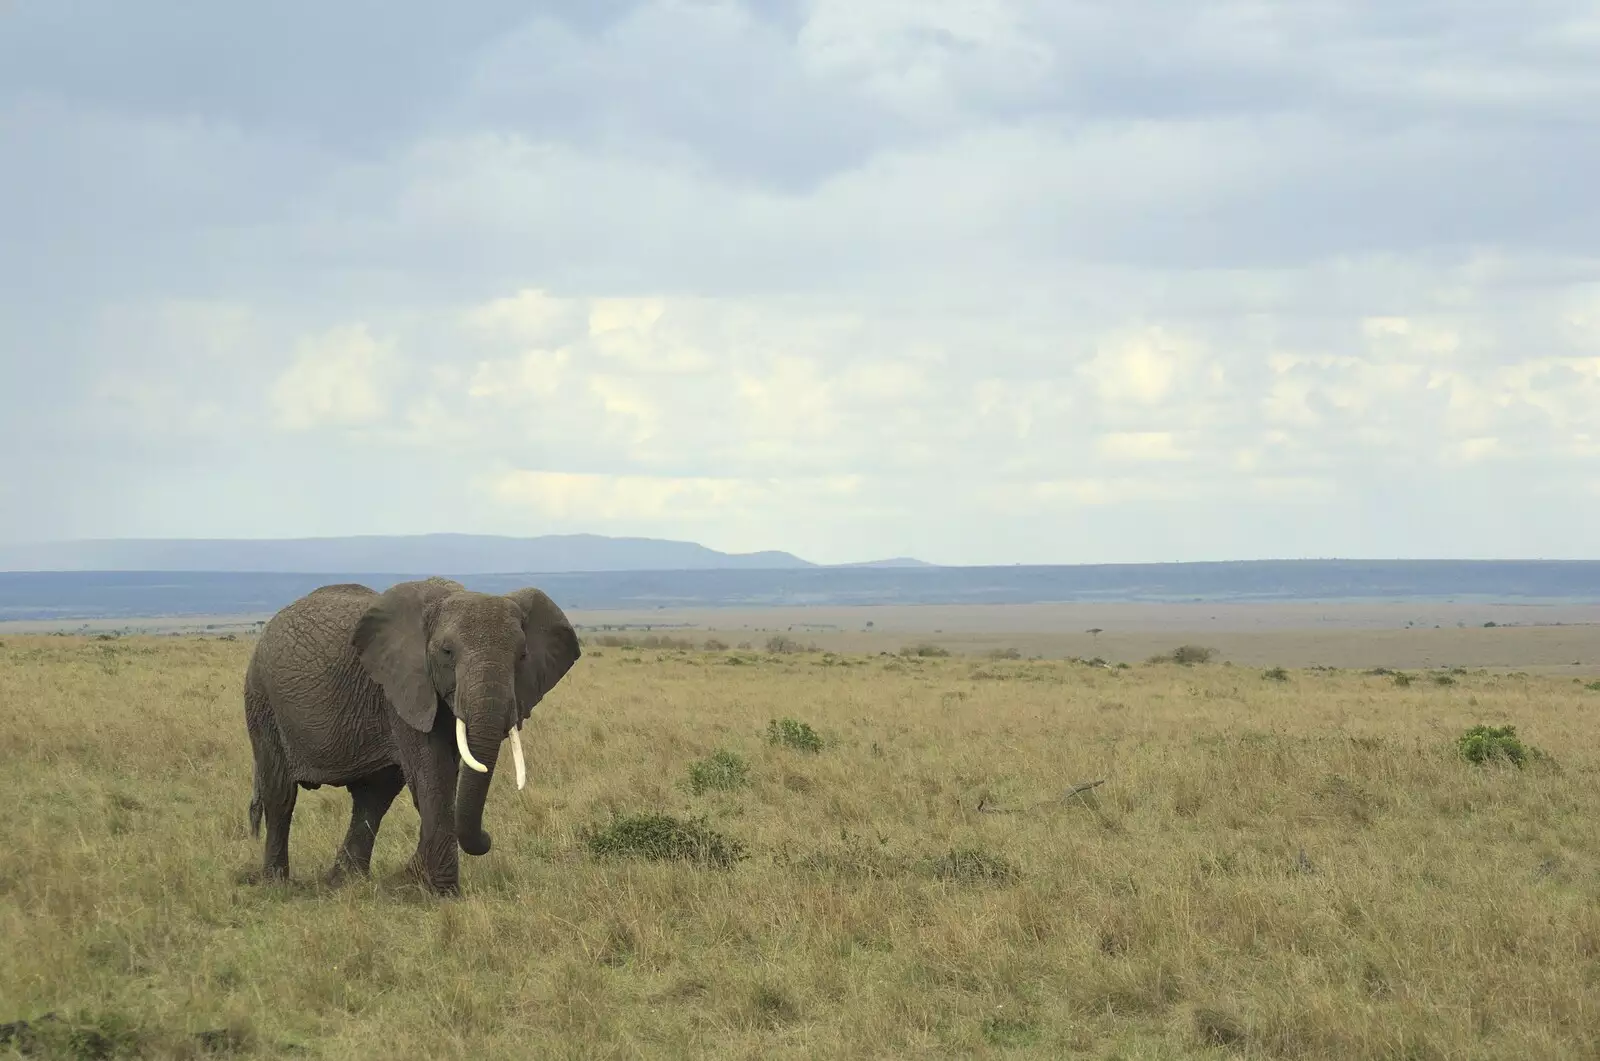 A lone elephant on the plains, from Maasai Mara Safari and a Maasai Village, Ololaimutia, Kenya - 5th November 2010